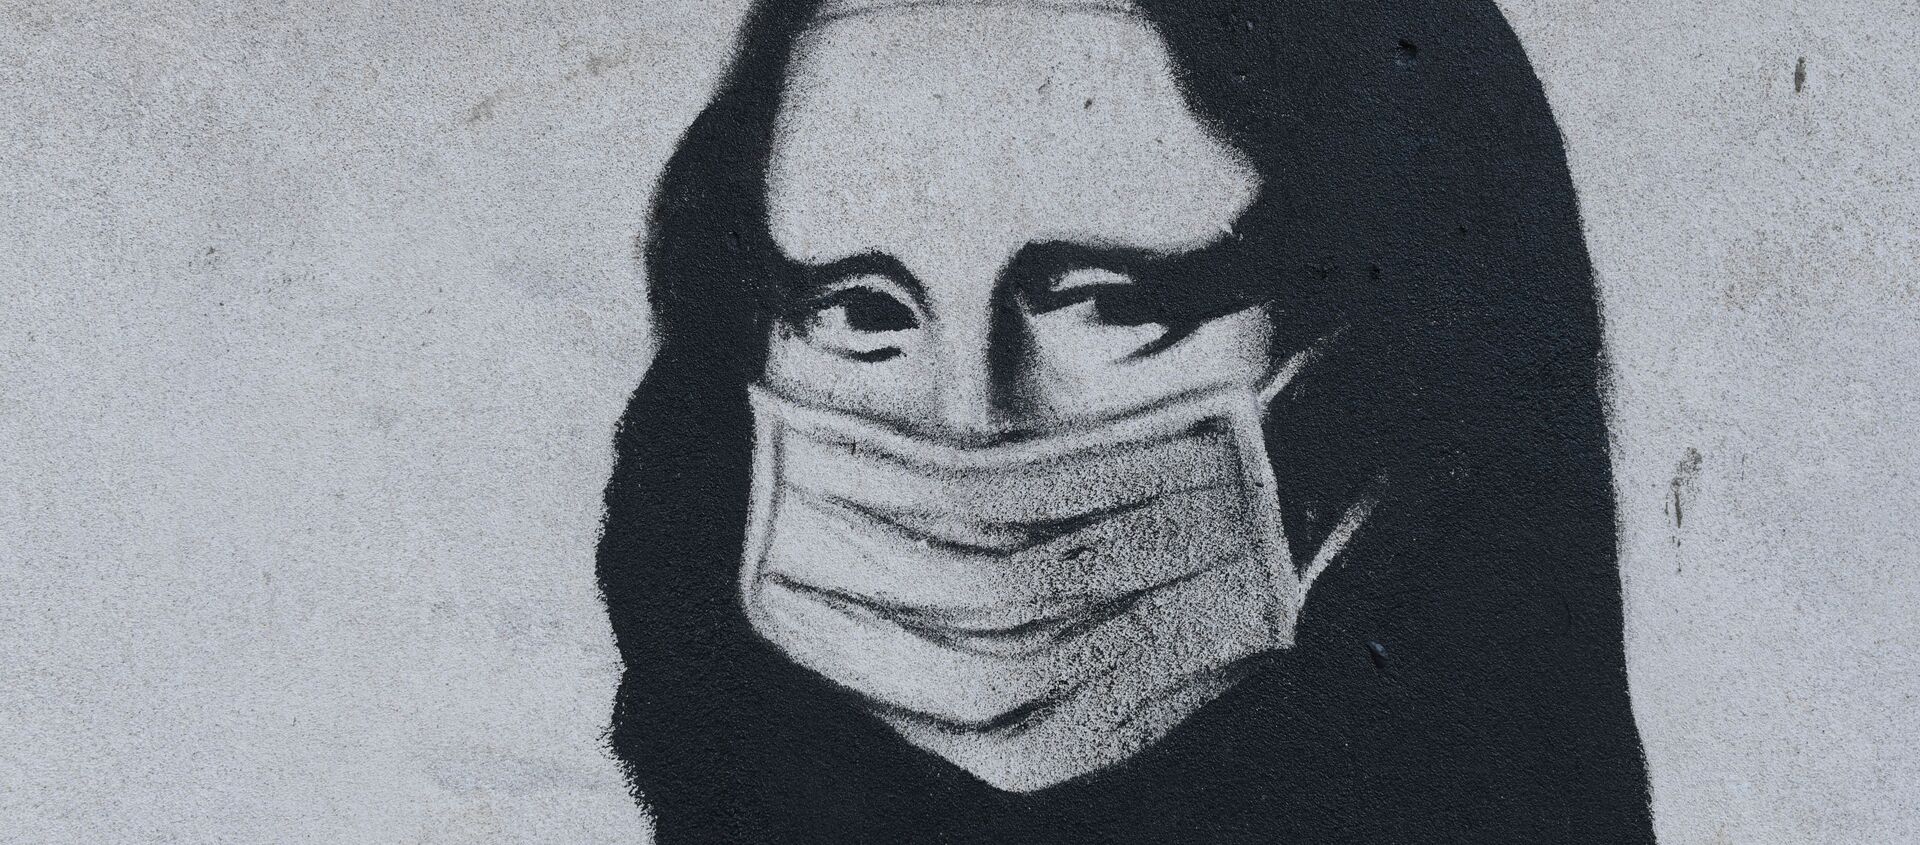 Мона Лиза крупно - Sputnik Ўзбекистон, 1920, 26.05.2020